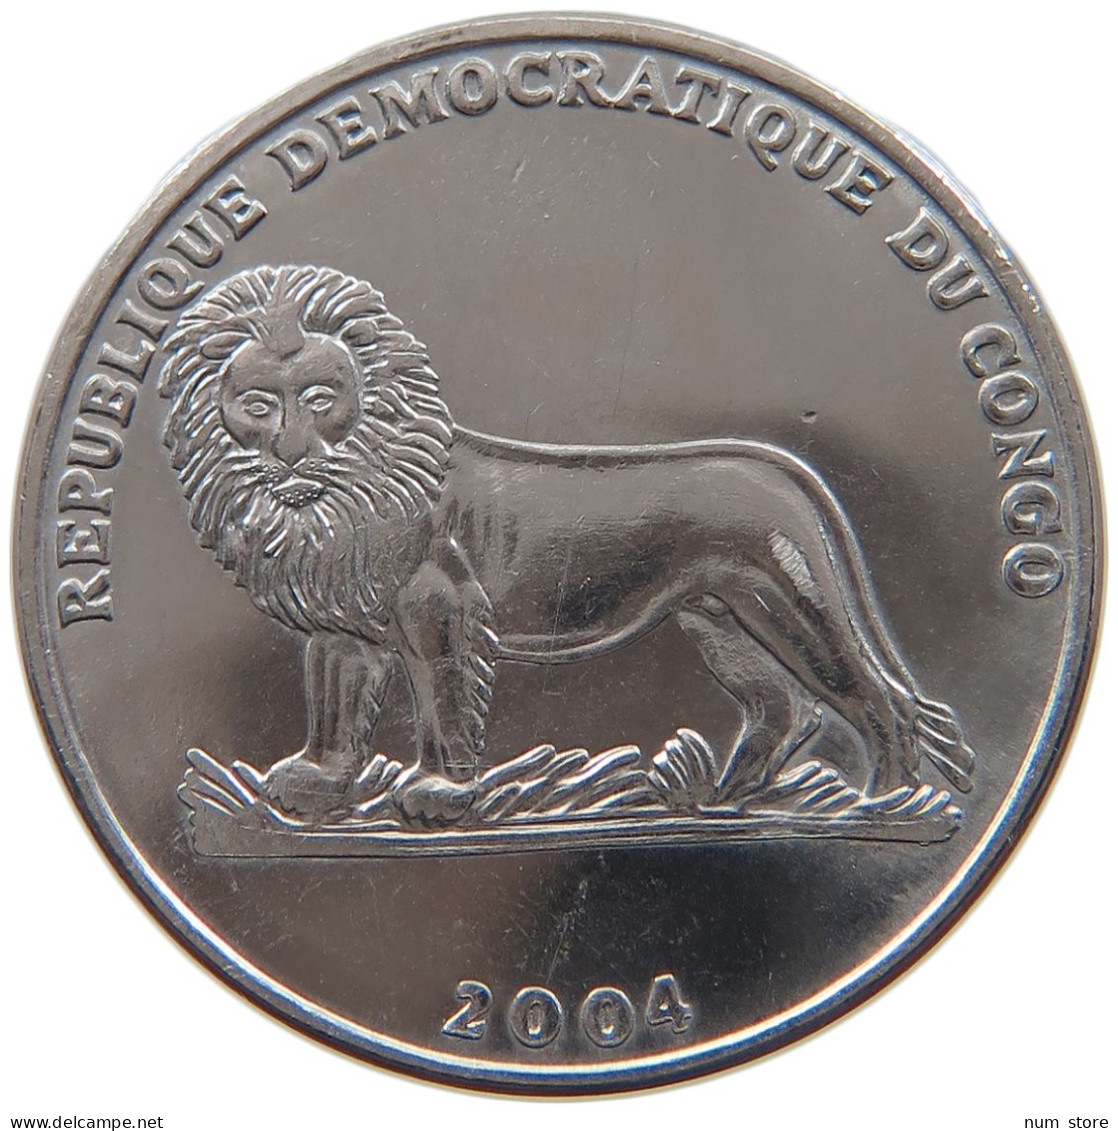 CONGO FRANC 2004  #MA 067389 - Congo (Republiek 1960)